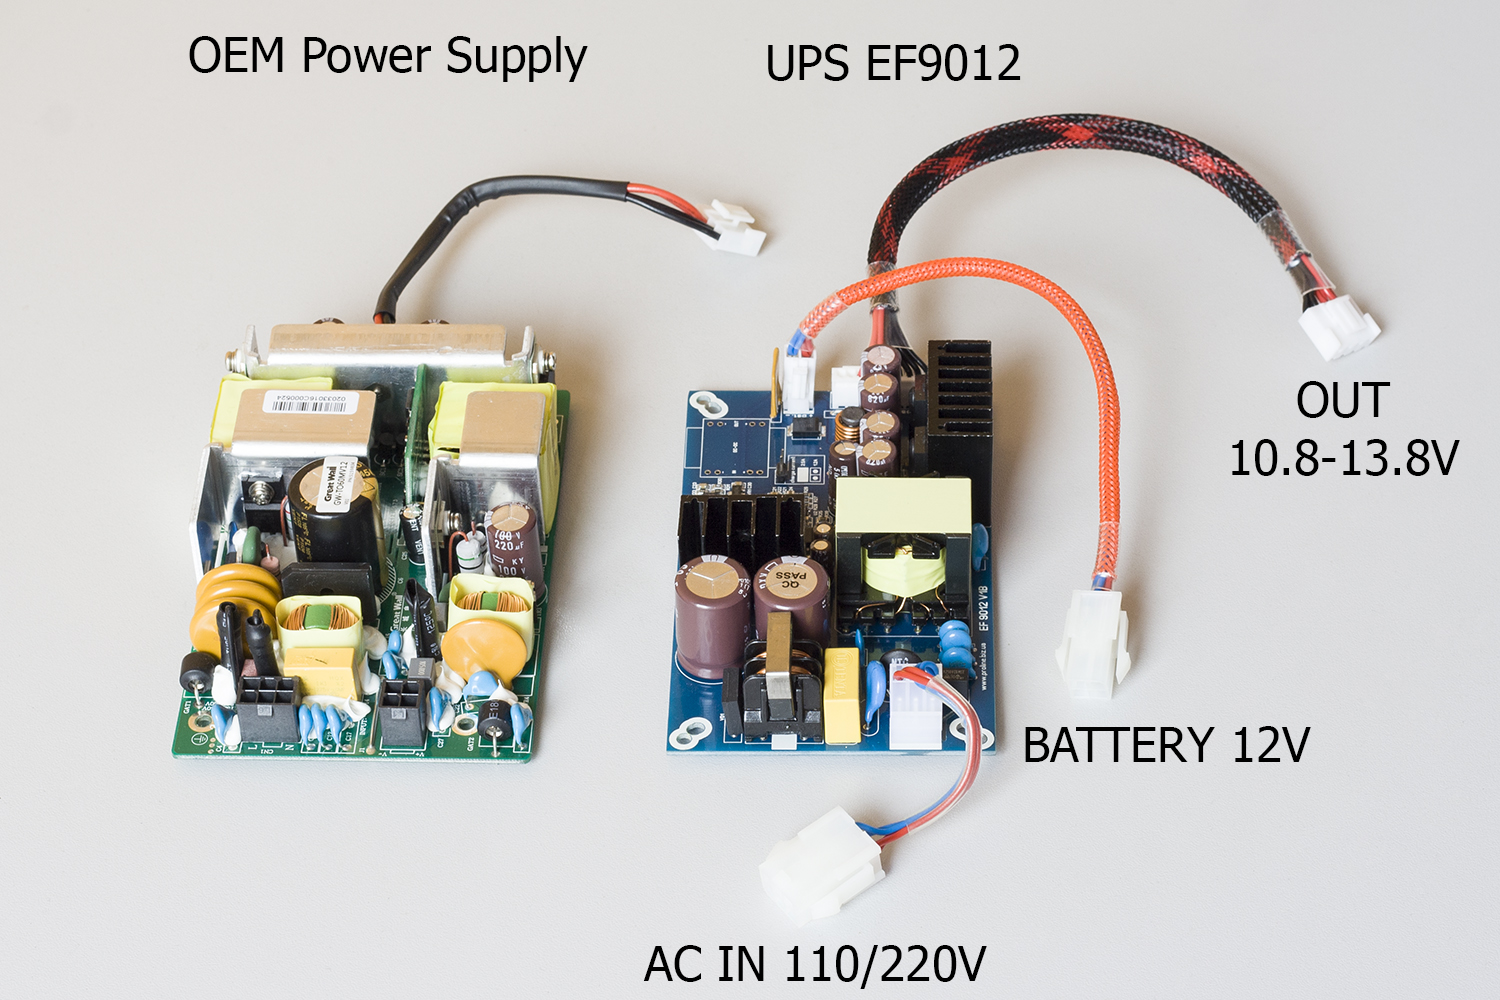 Edge-Core ECS 4120-28F - Original Power supply vs embedded UPS EF9012